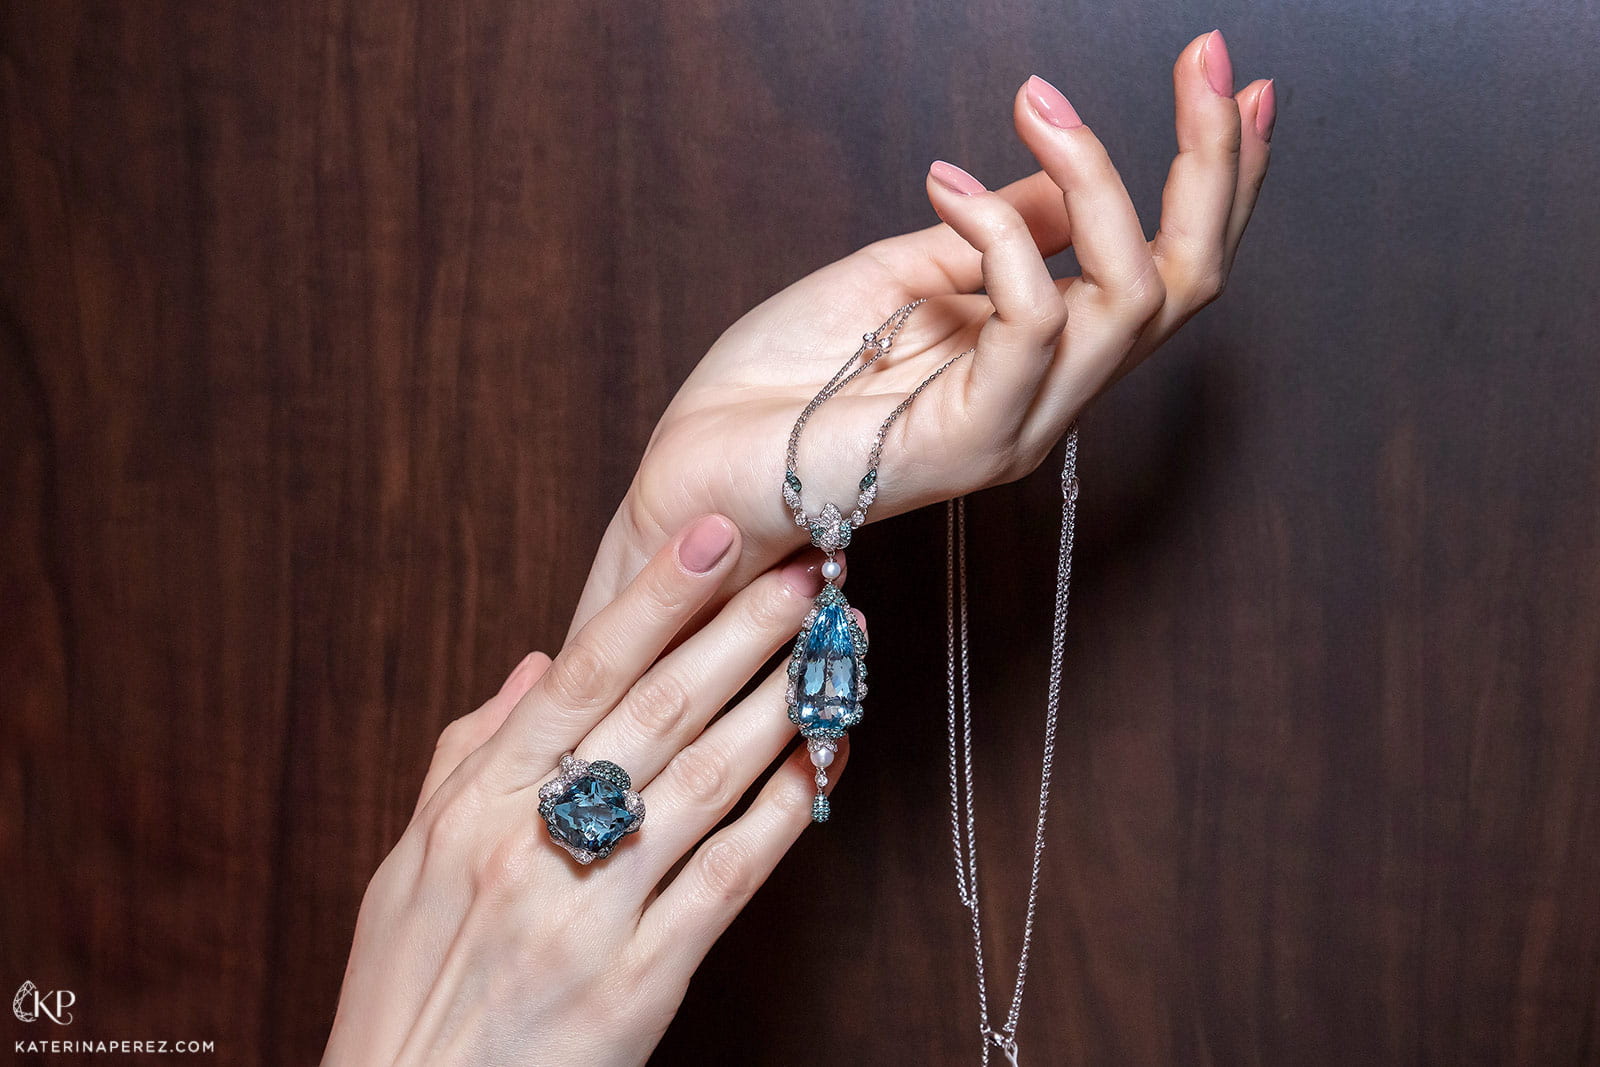 Sunita Nahata 'Blue Planet' ring with 16.89ct Santa Maria aquamarine and pendant with 17.84ct Santa Maria aquamarine, both with Alexandrites, Paraiba tourmalines, diamonds and pearls in white gold